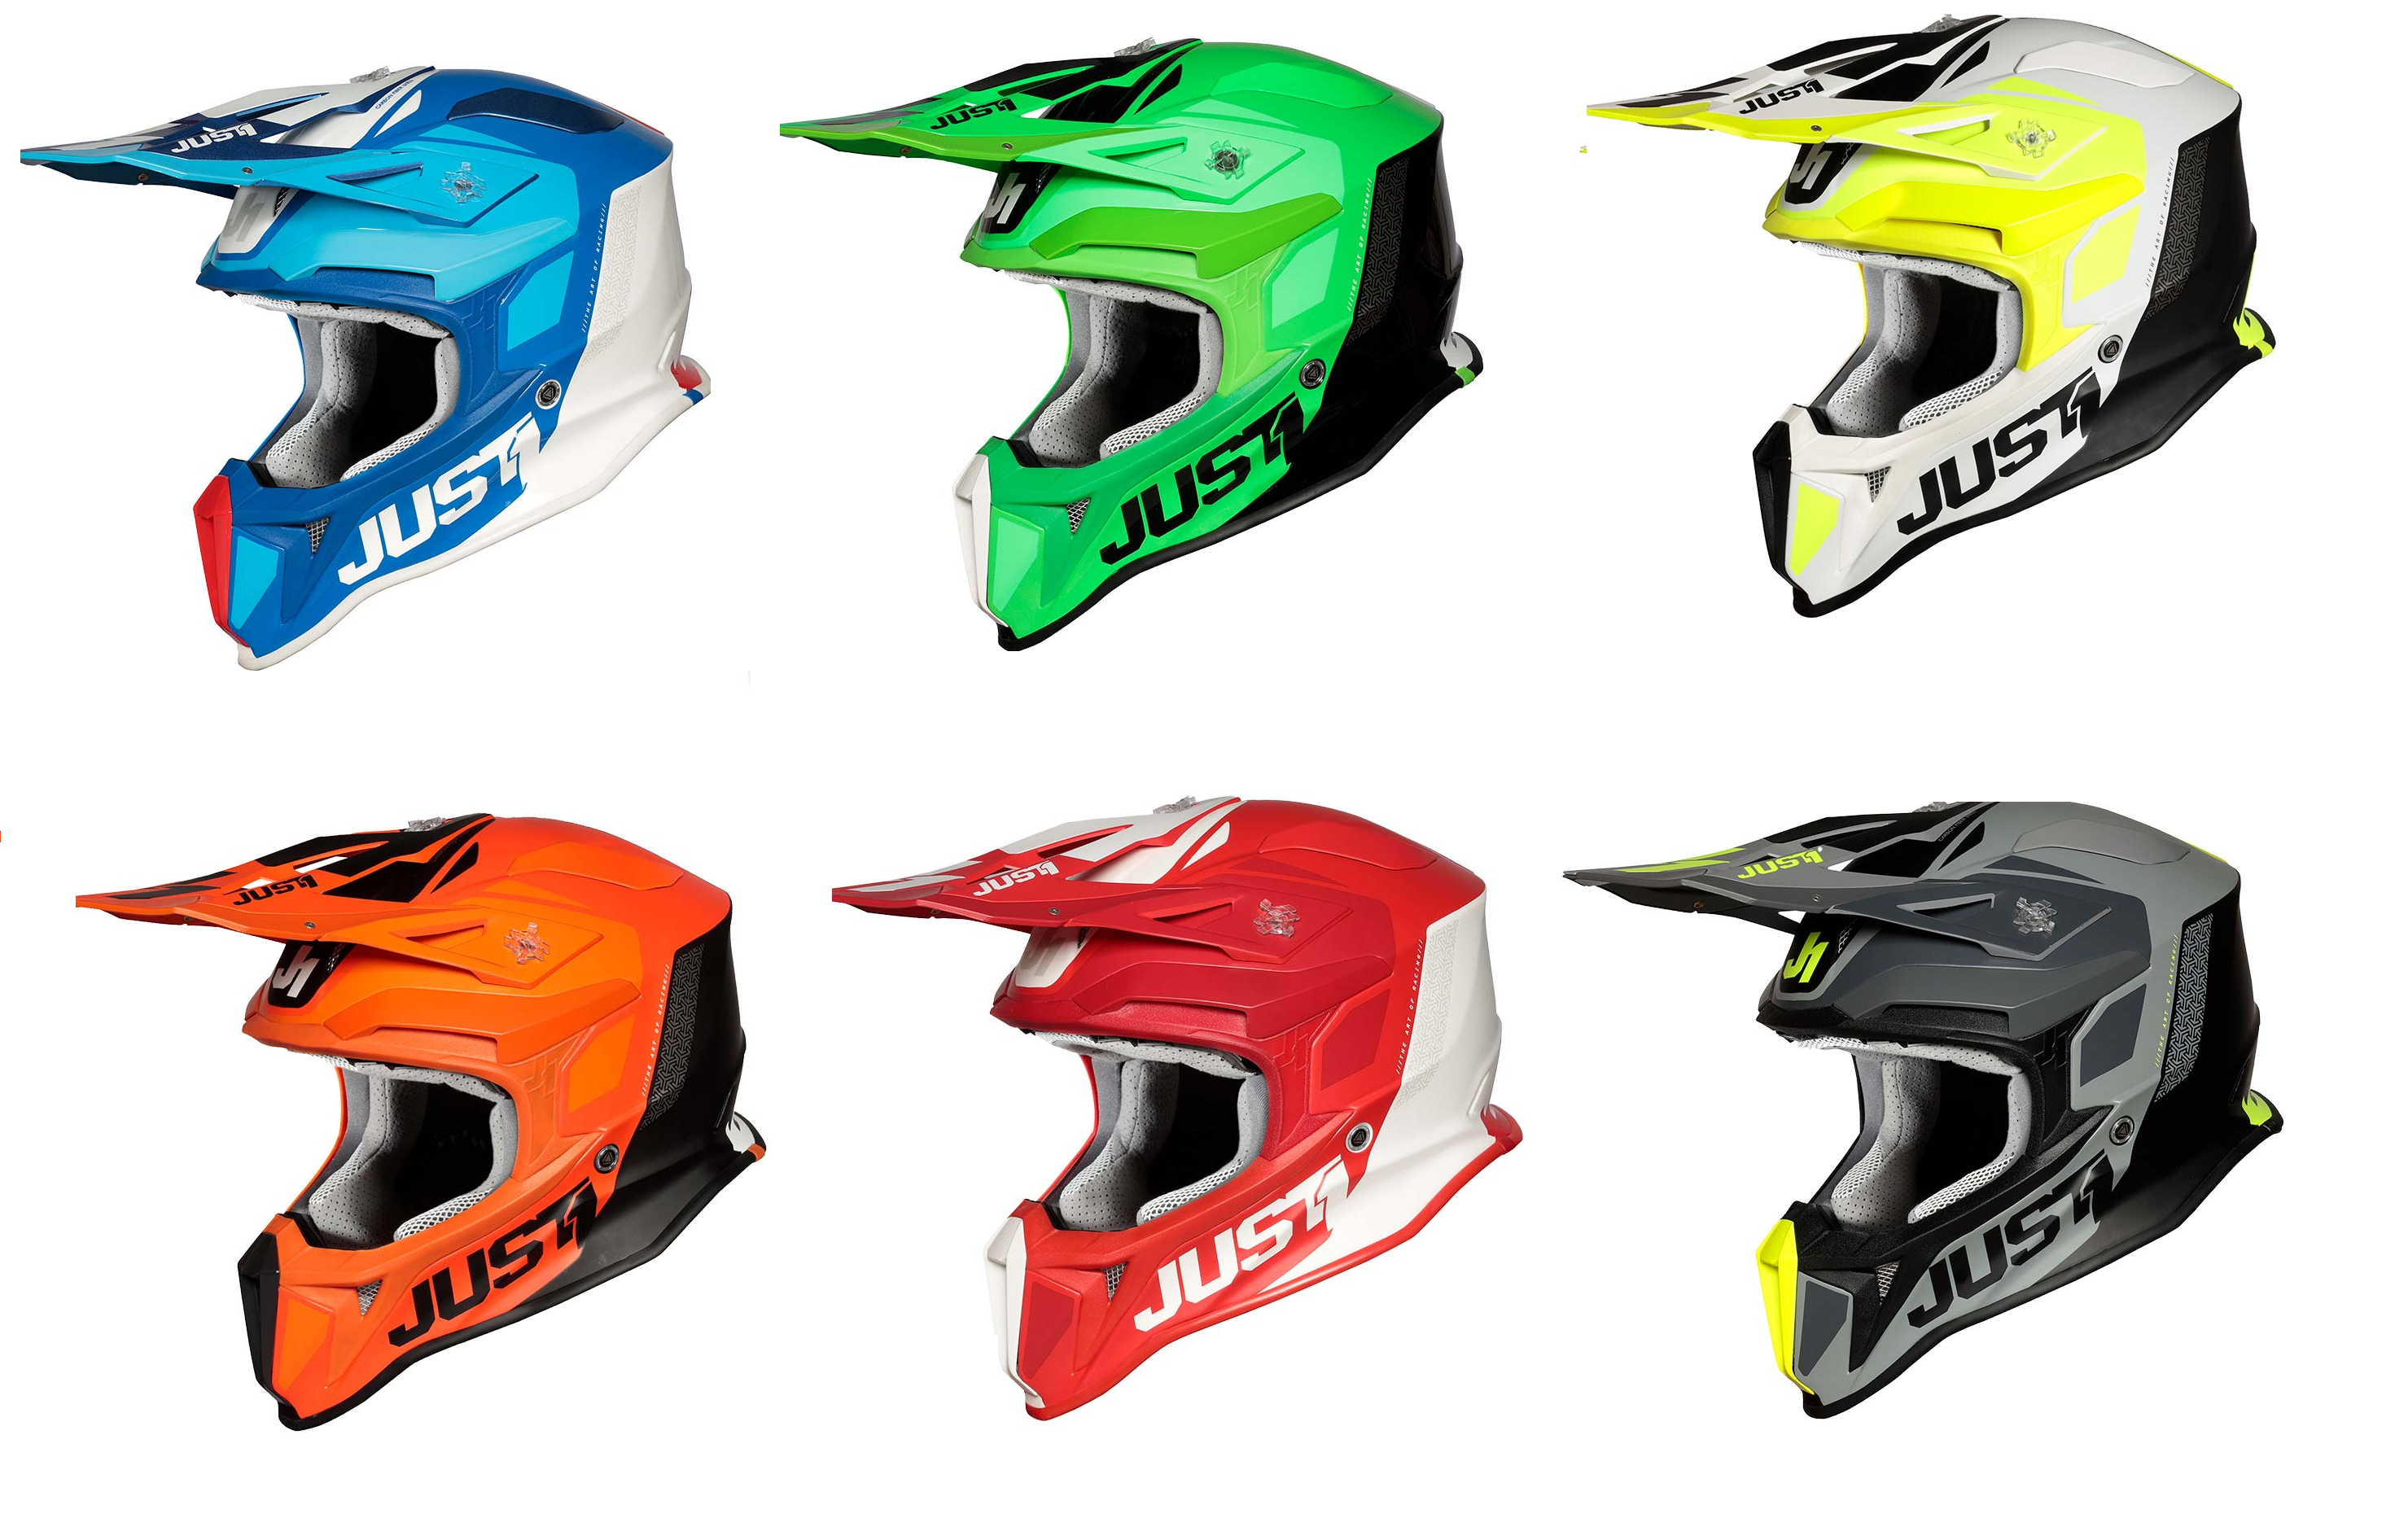 Just1 J18 Fiberglass Pulsar Helmet (Six Colors) (XS-XXL) [Discontinued]